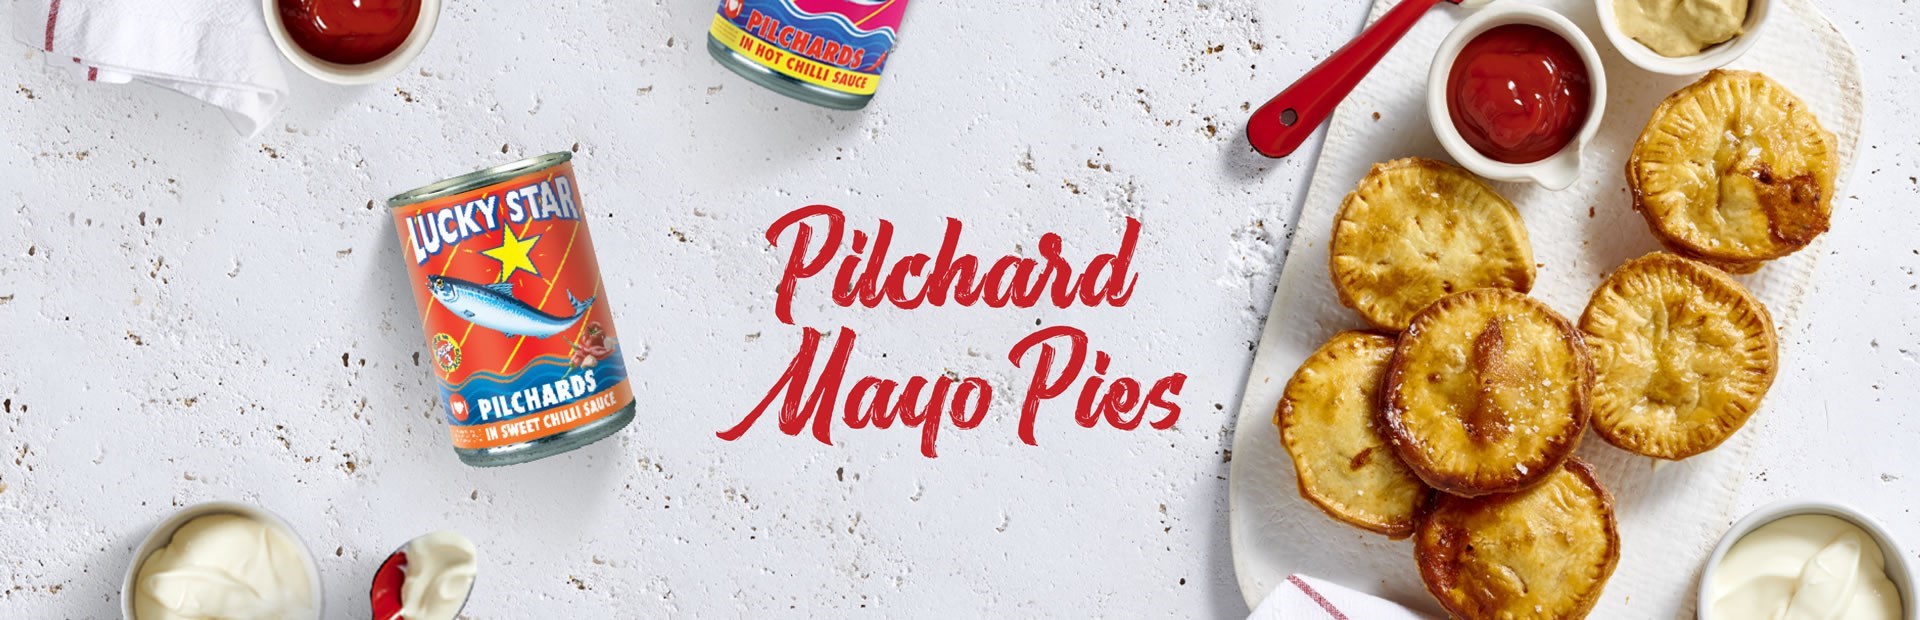 Pilchard Mayo Pies banner